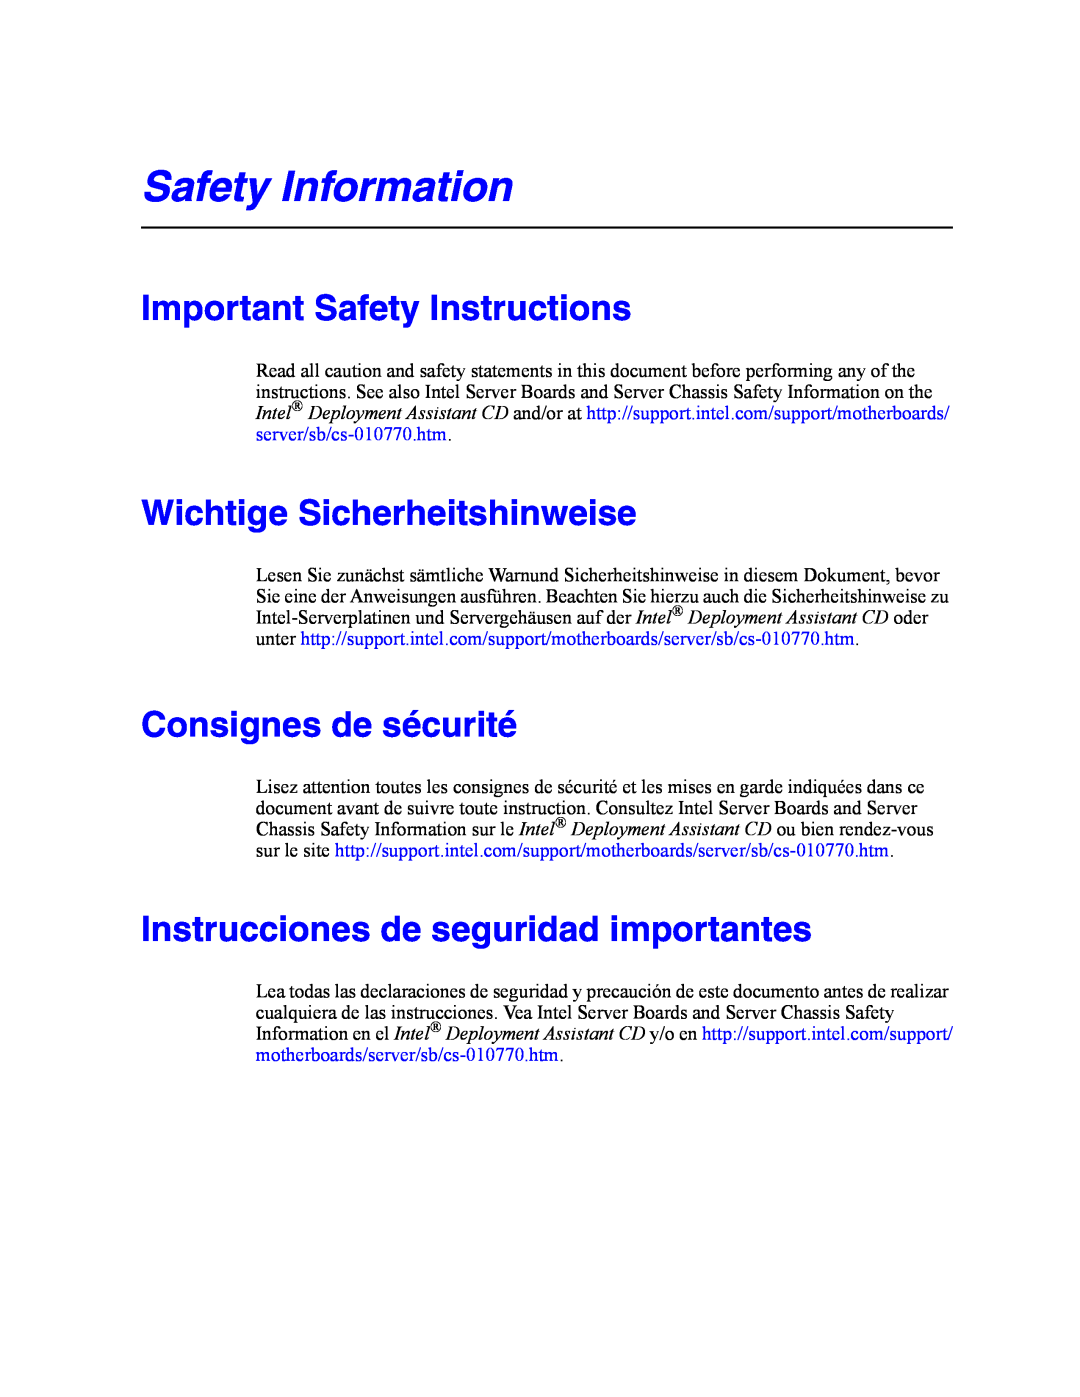 Intel SR2500AL Safety Information, Important Safety Instructions, Wichtige Sicherheitshinweise, Consignes de sécurité 